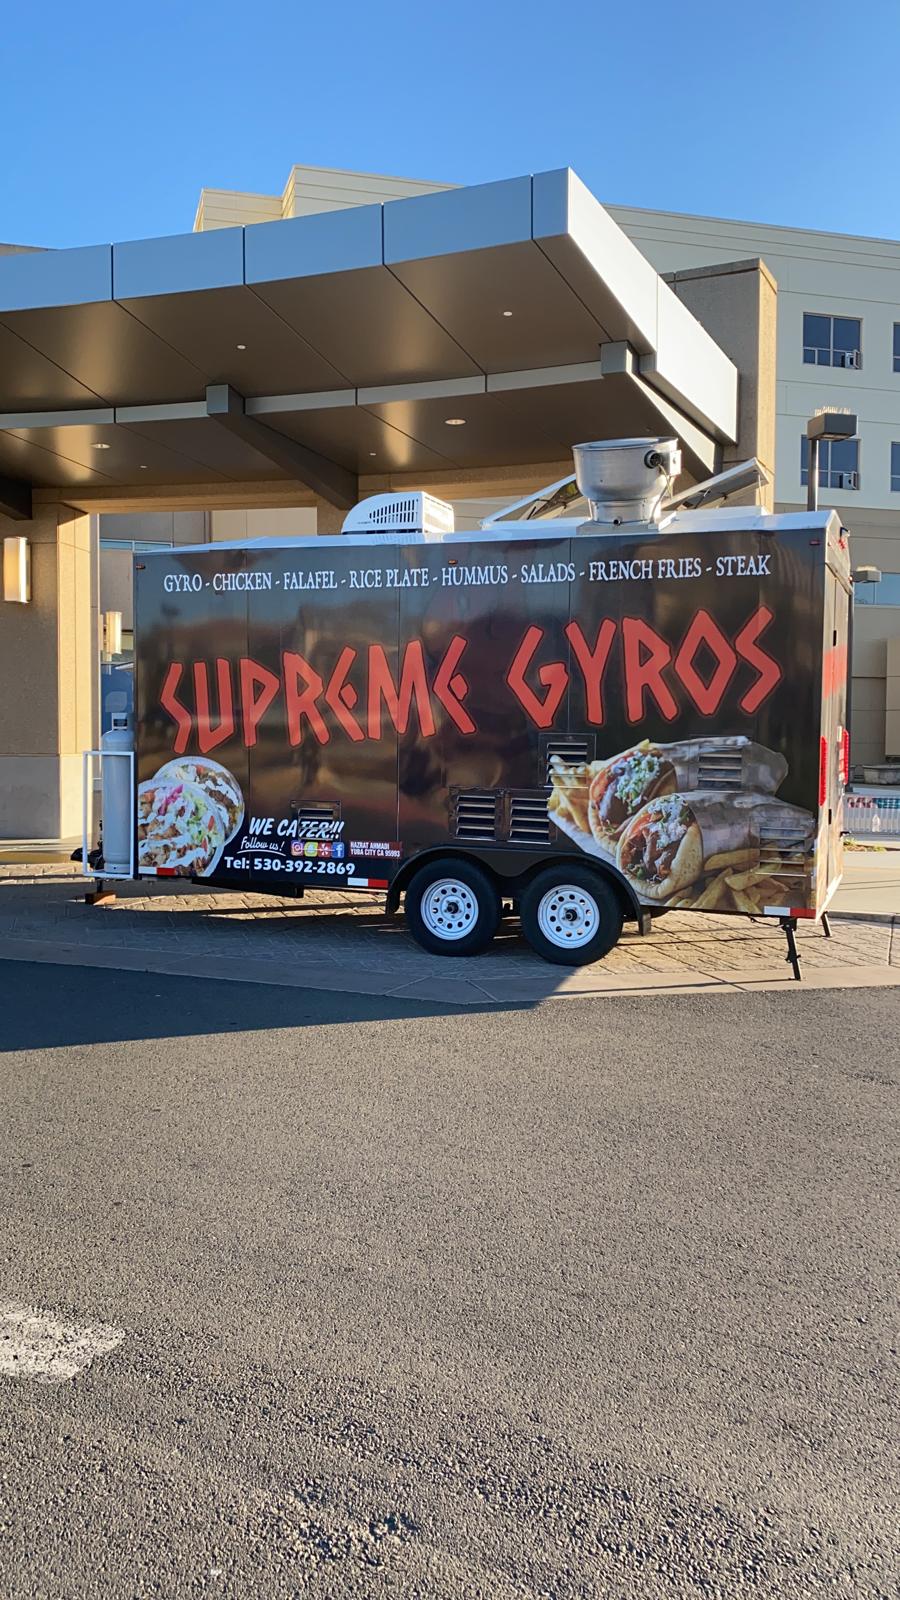 Supreme Gyros